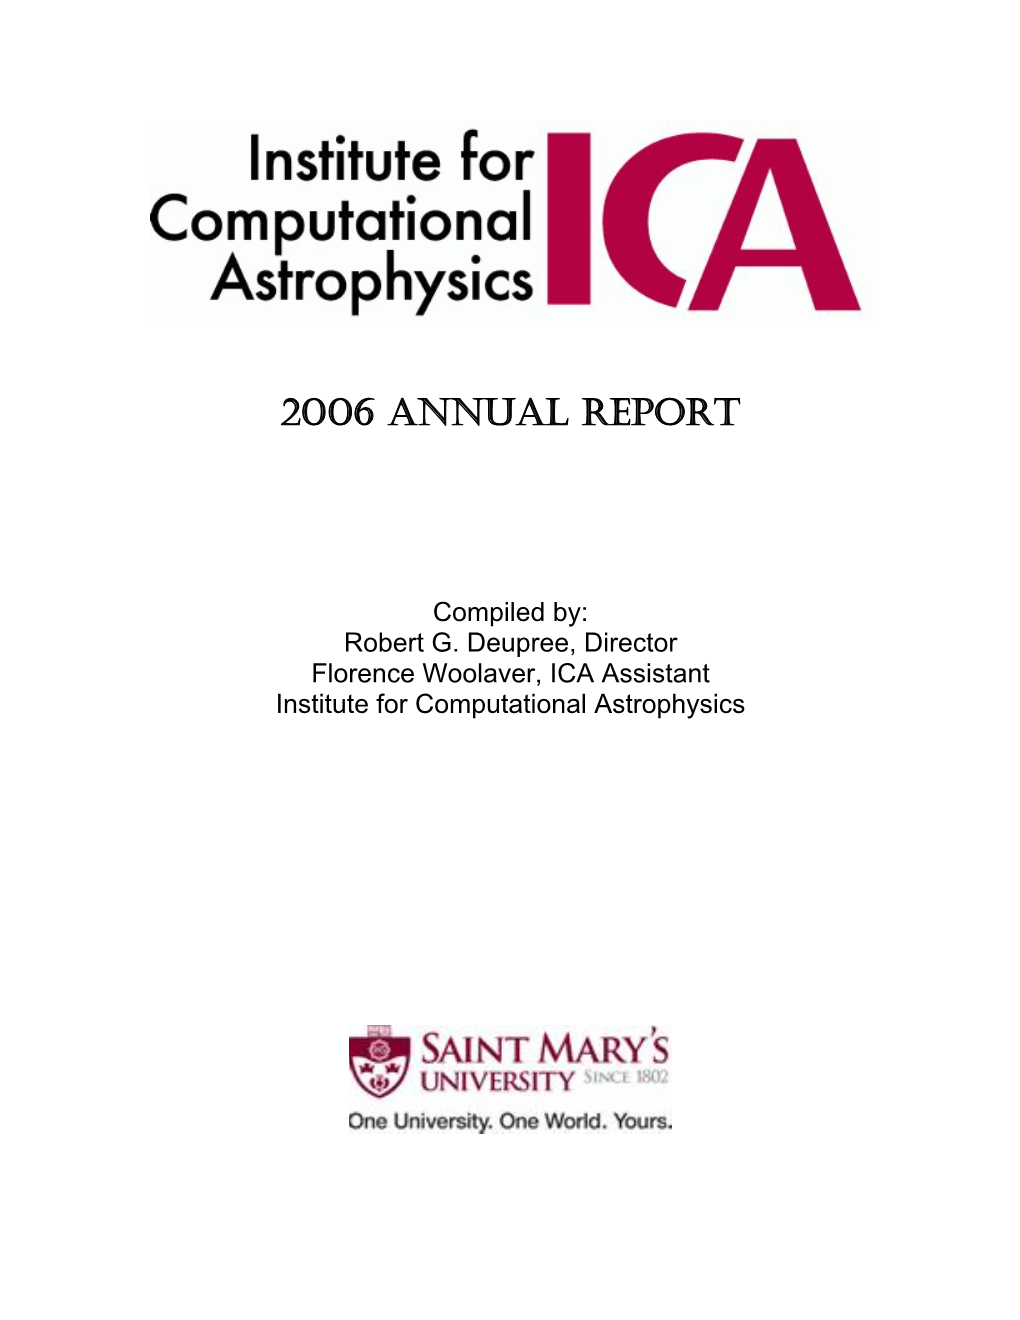 ICA 2006 Annual Report